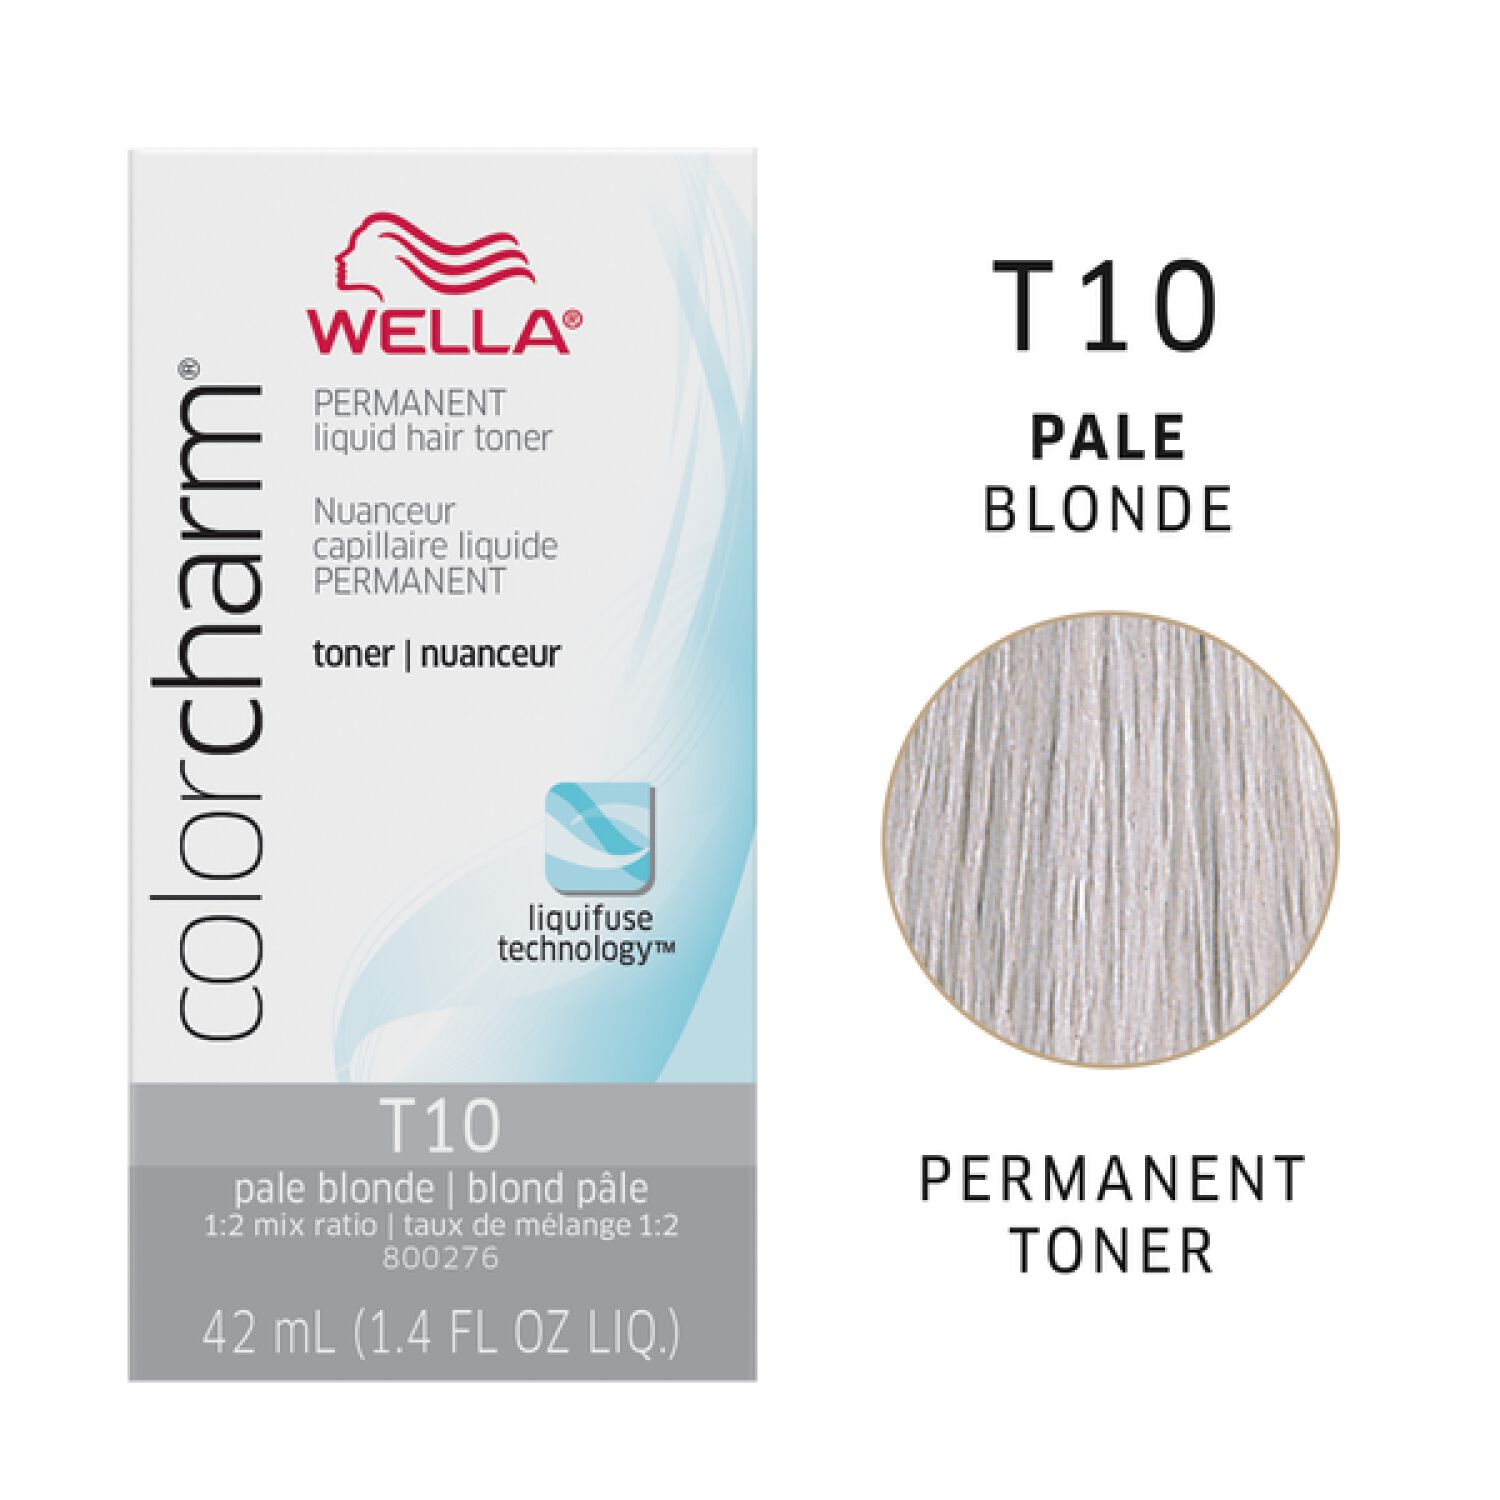 Wella Color Charm T10 Pale Blonde hair toner dye